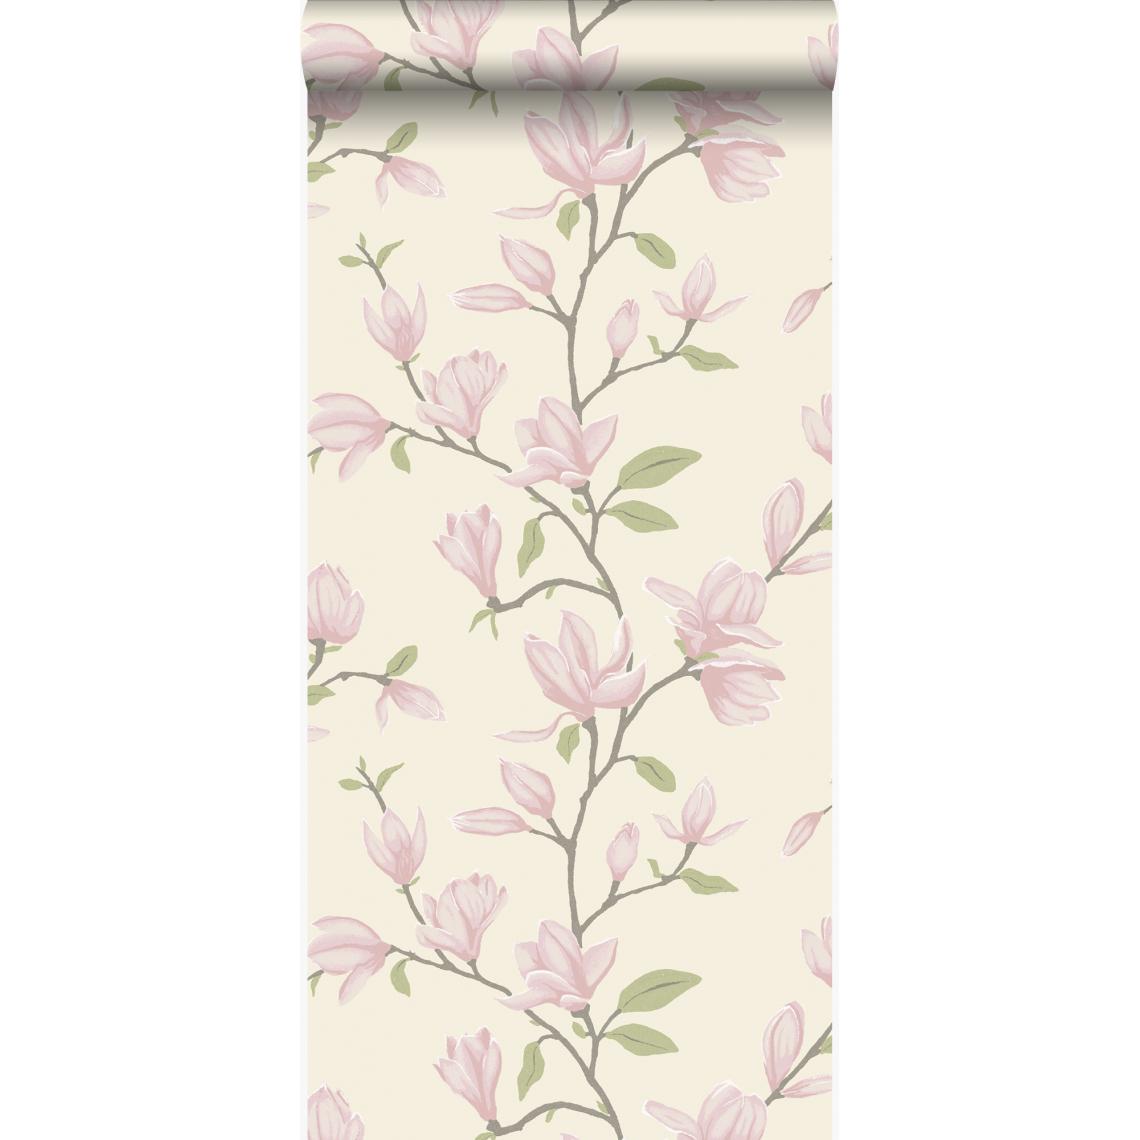 Origin - Origin papier peint magnolia beige crème et rose clair - 347050 - 53 cm x 10,05 m - Papier peint